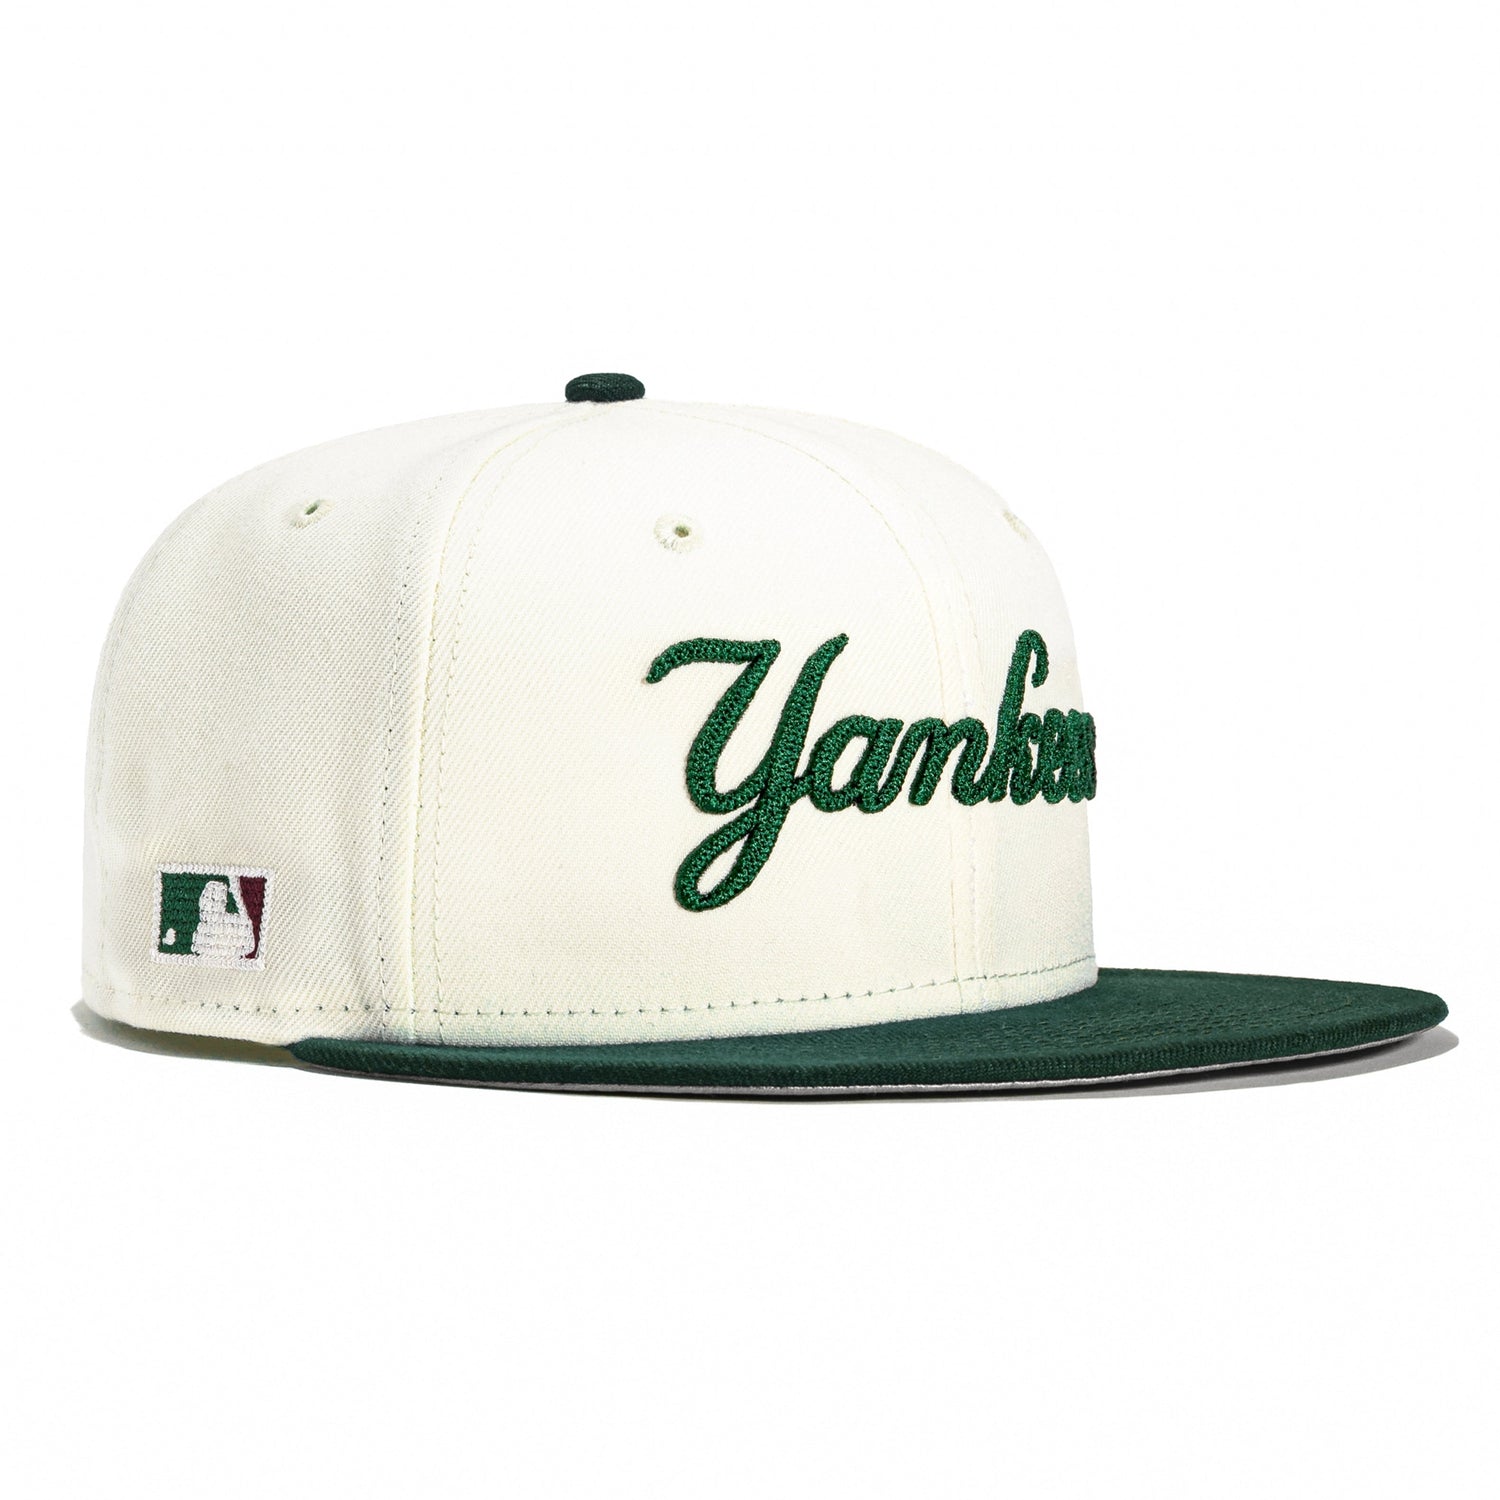 New York Yankees hats